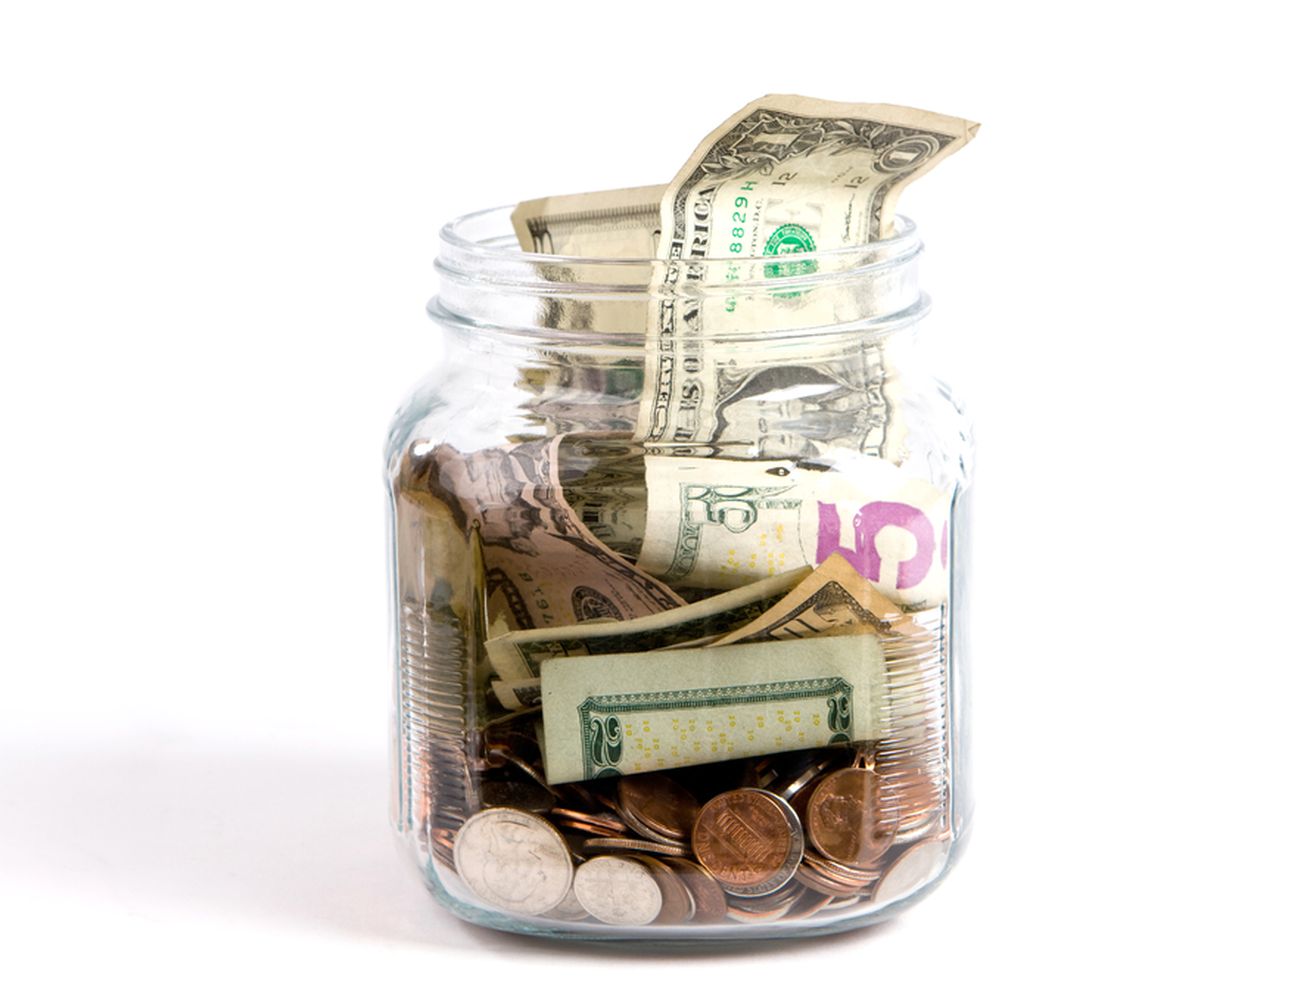 tip jar full of cash